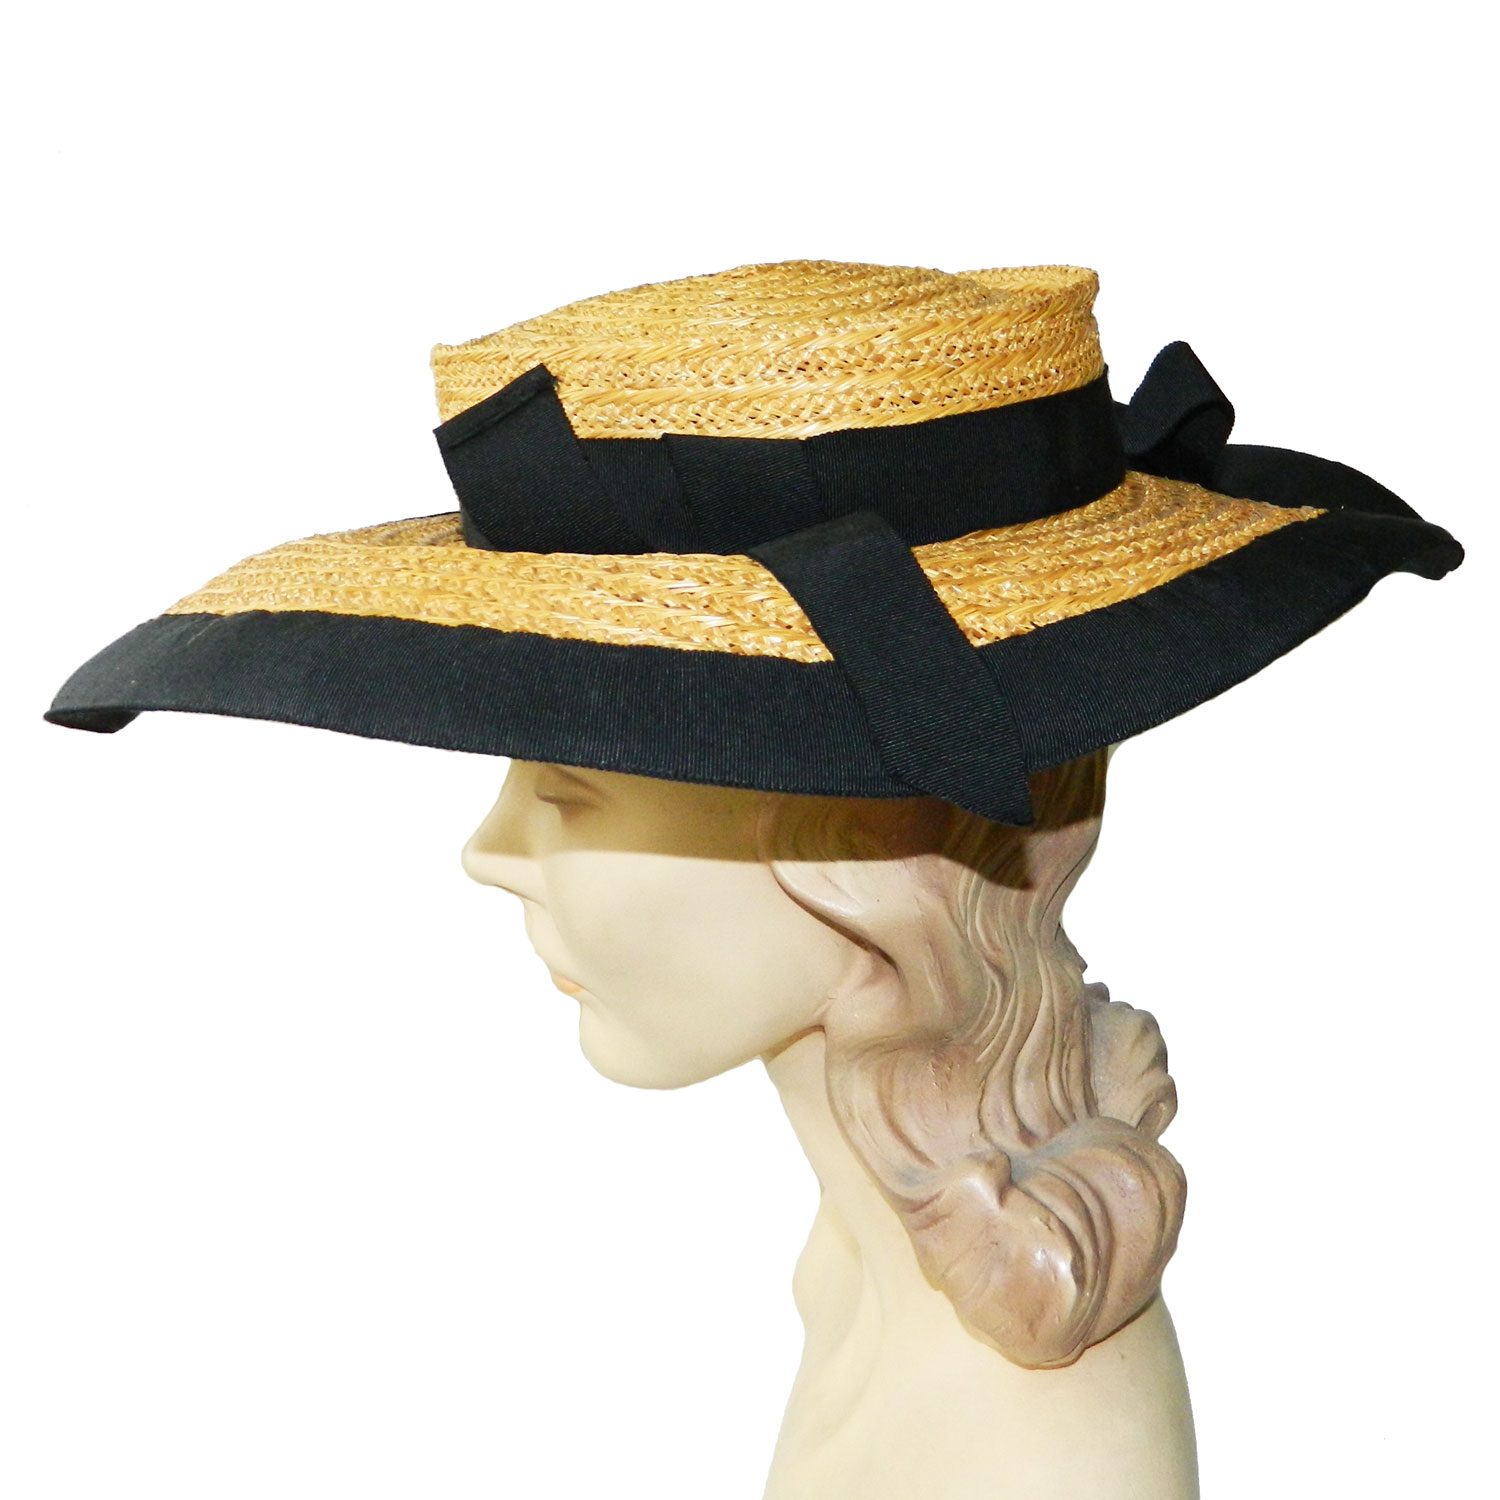 1950s staw hat